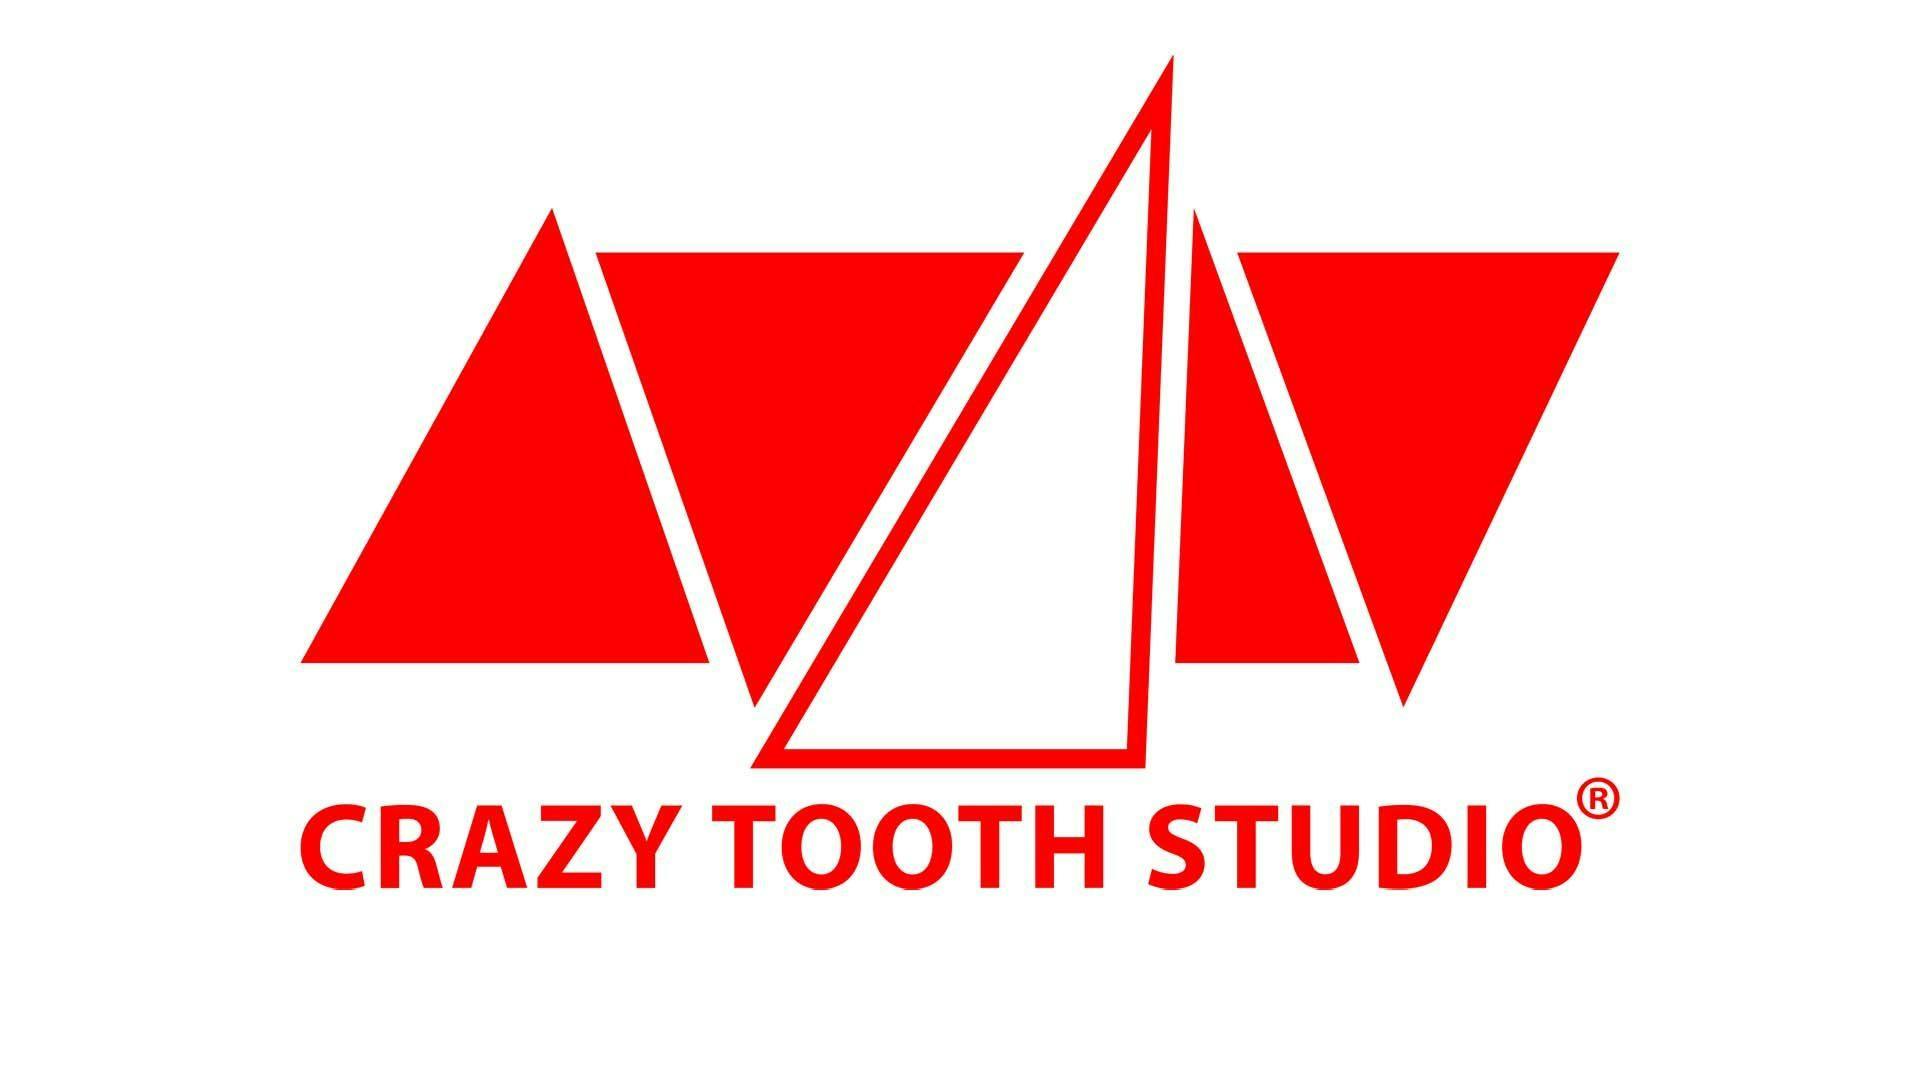 Crazy Tooth Studio Slot Provider